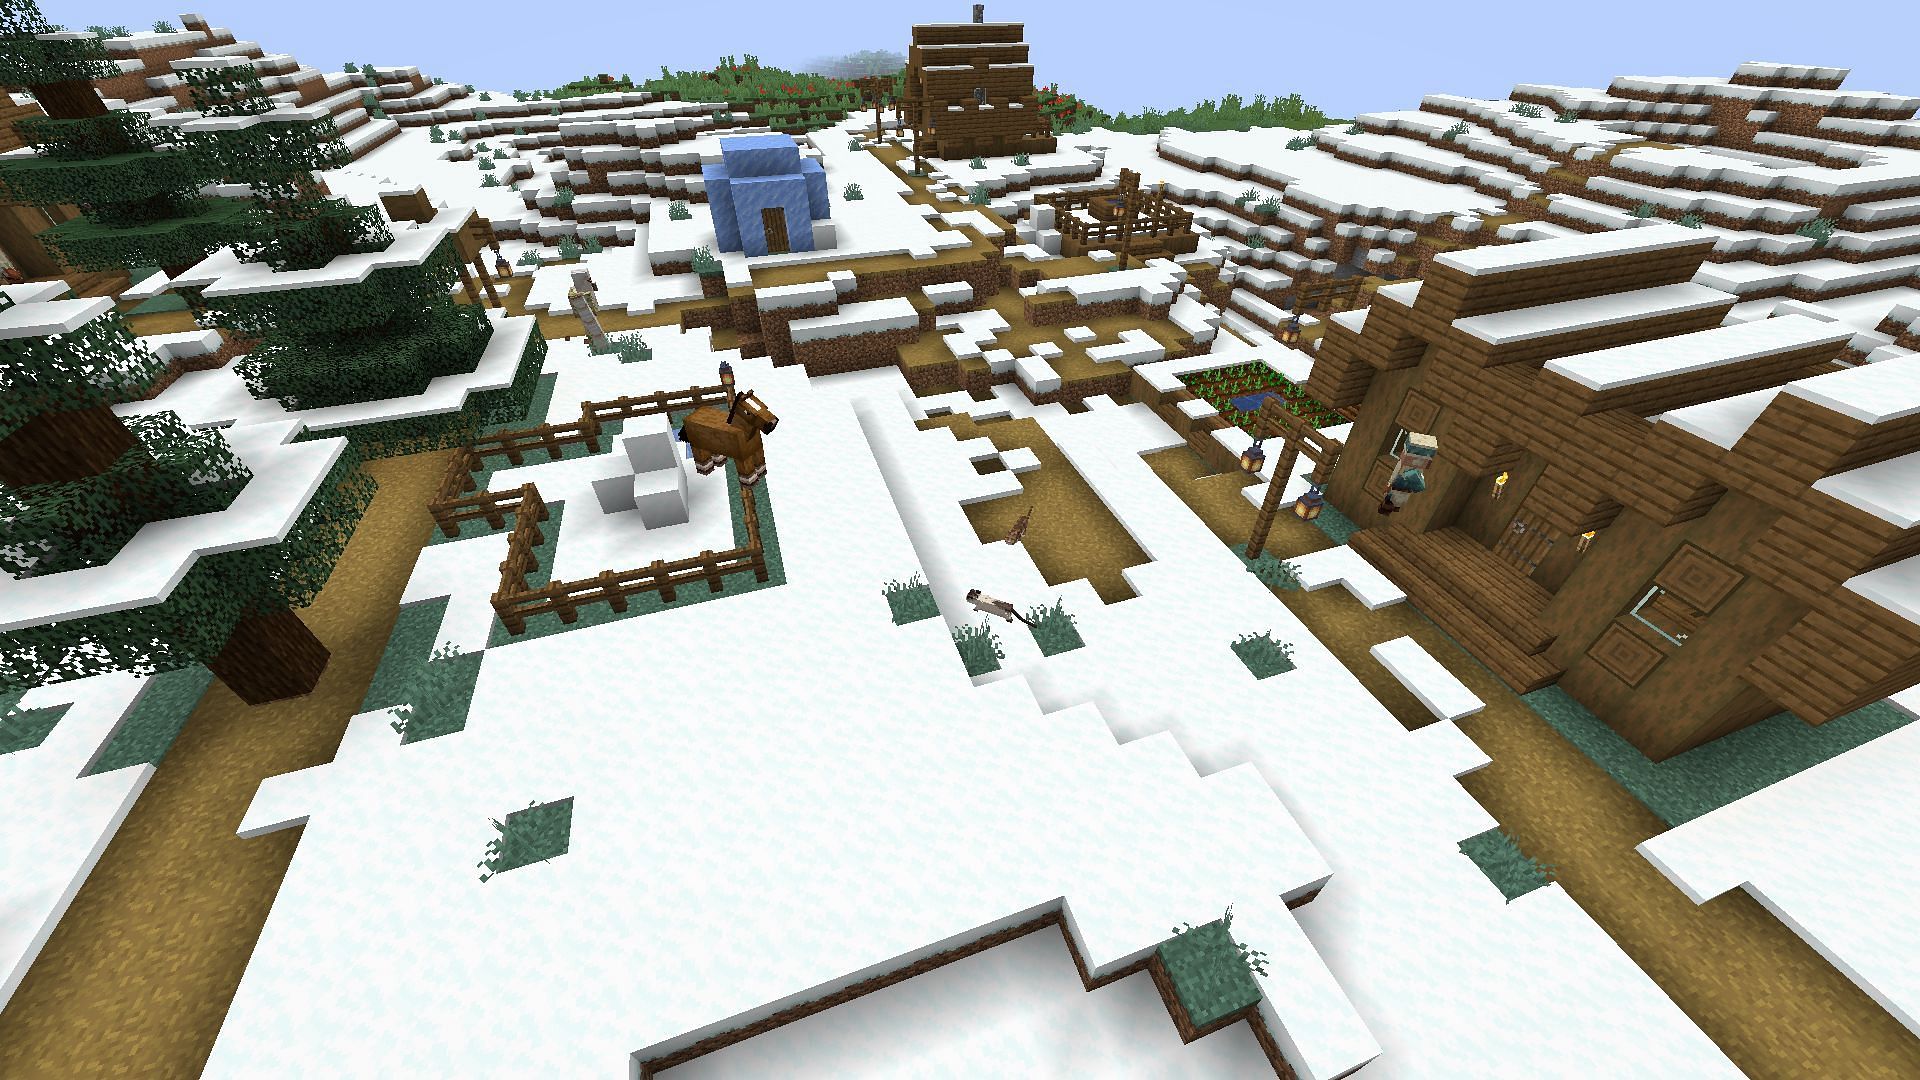 Snowy village (Image via Mojang)